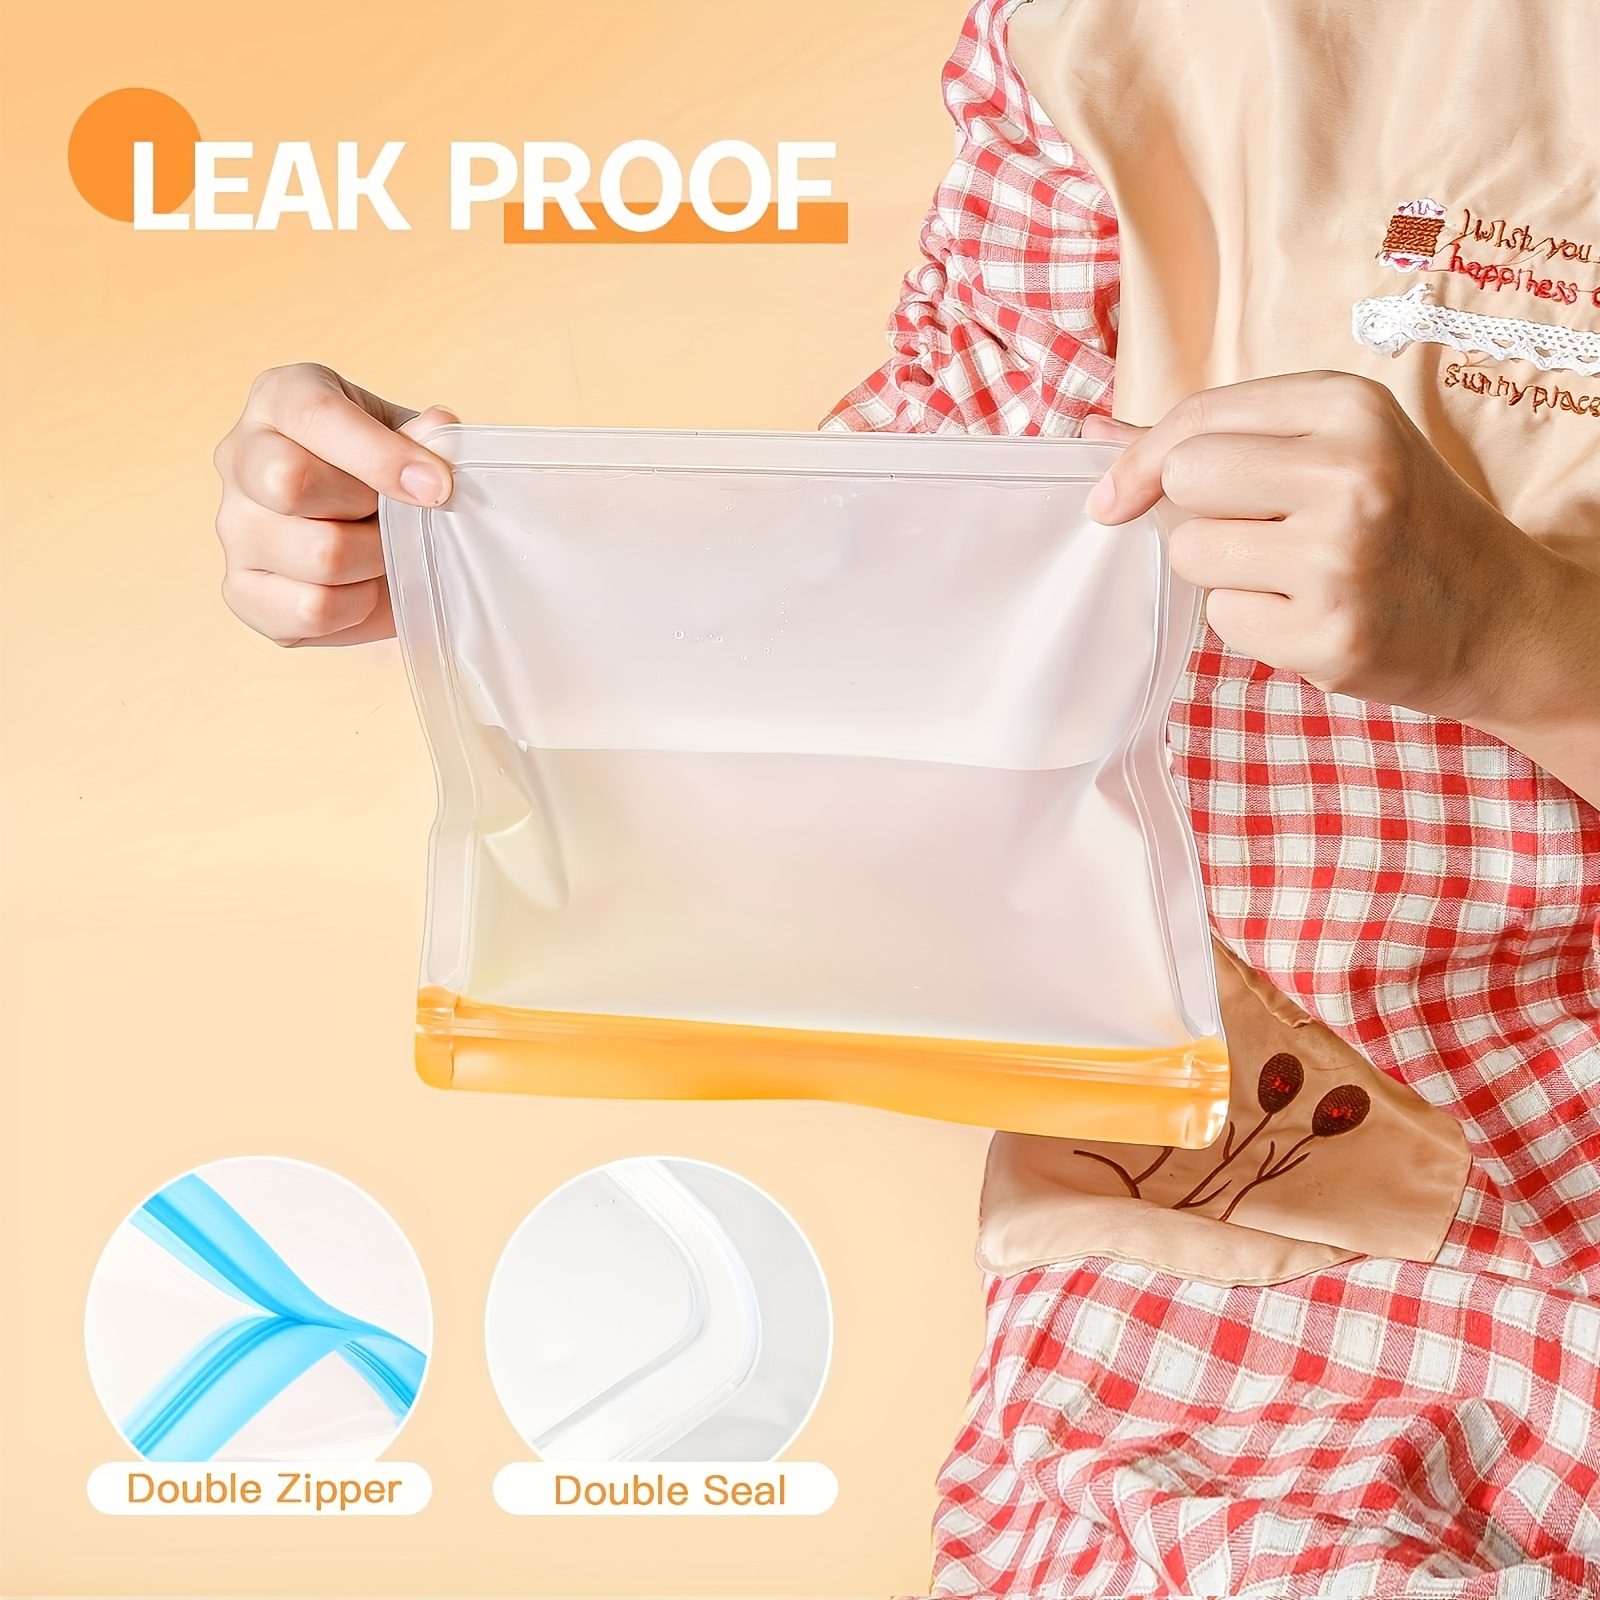 Leakproof Reusable Food Storage Bags - Bpa Free Reusable Freezer Bags (2  Gallon & 5 Sandwich & 5 Snack Size Bags & 1 Sealed Bag Holder Stand ),  Leakproof Freezer Safe Bag